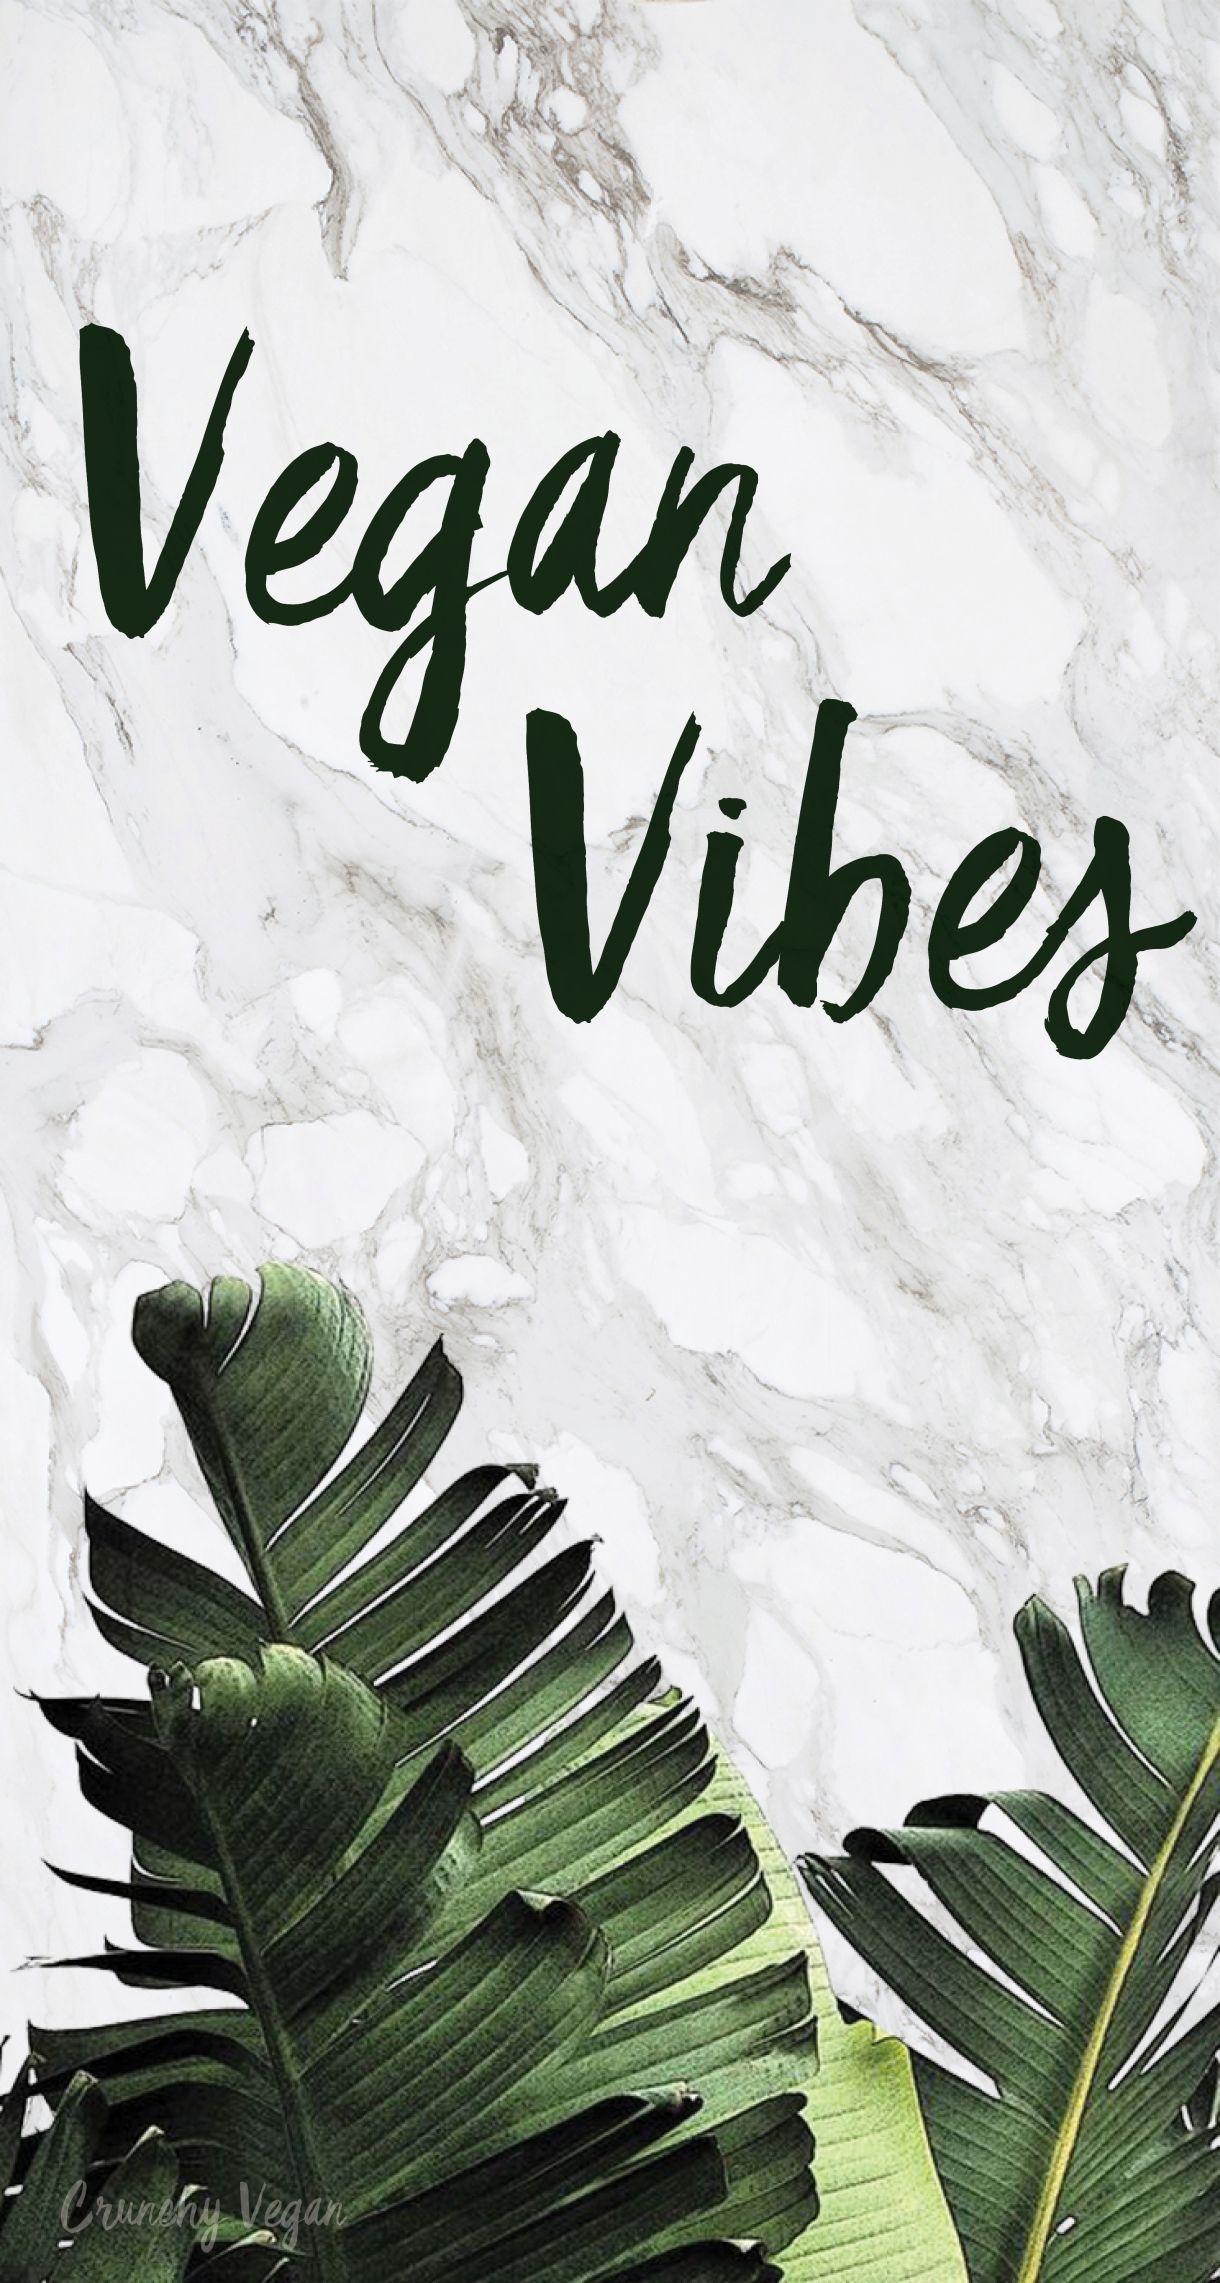 Vegan vibes phone wallpaper from Crunchy Vegan